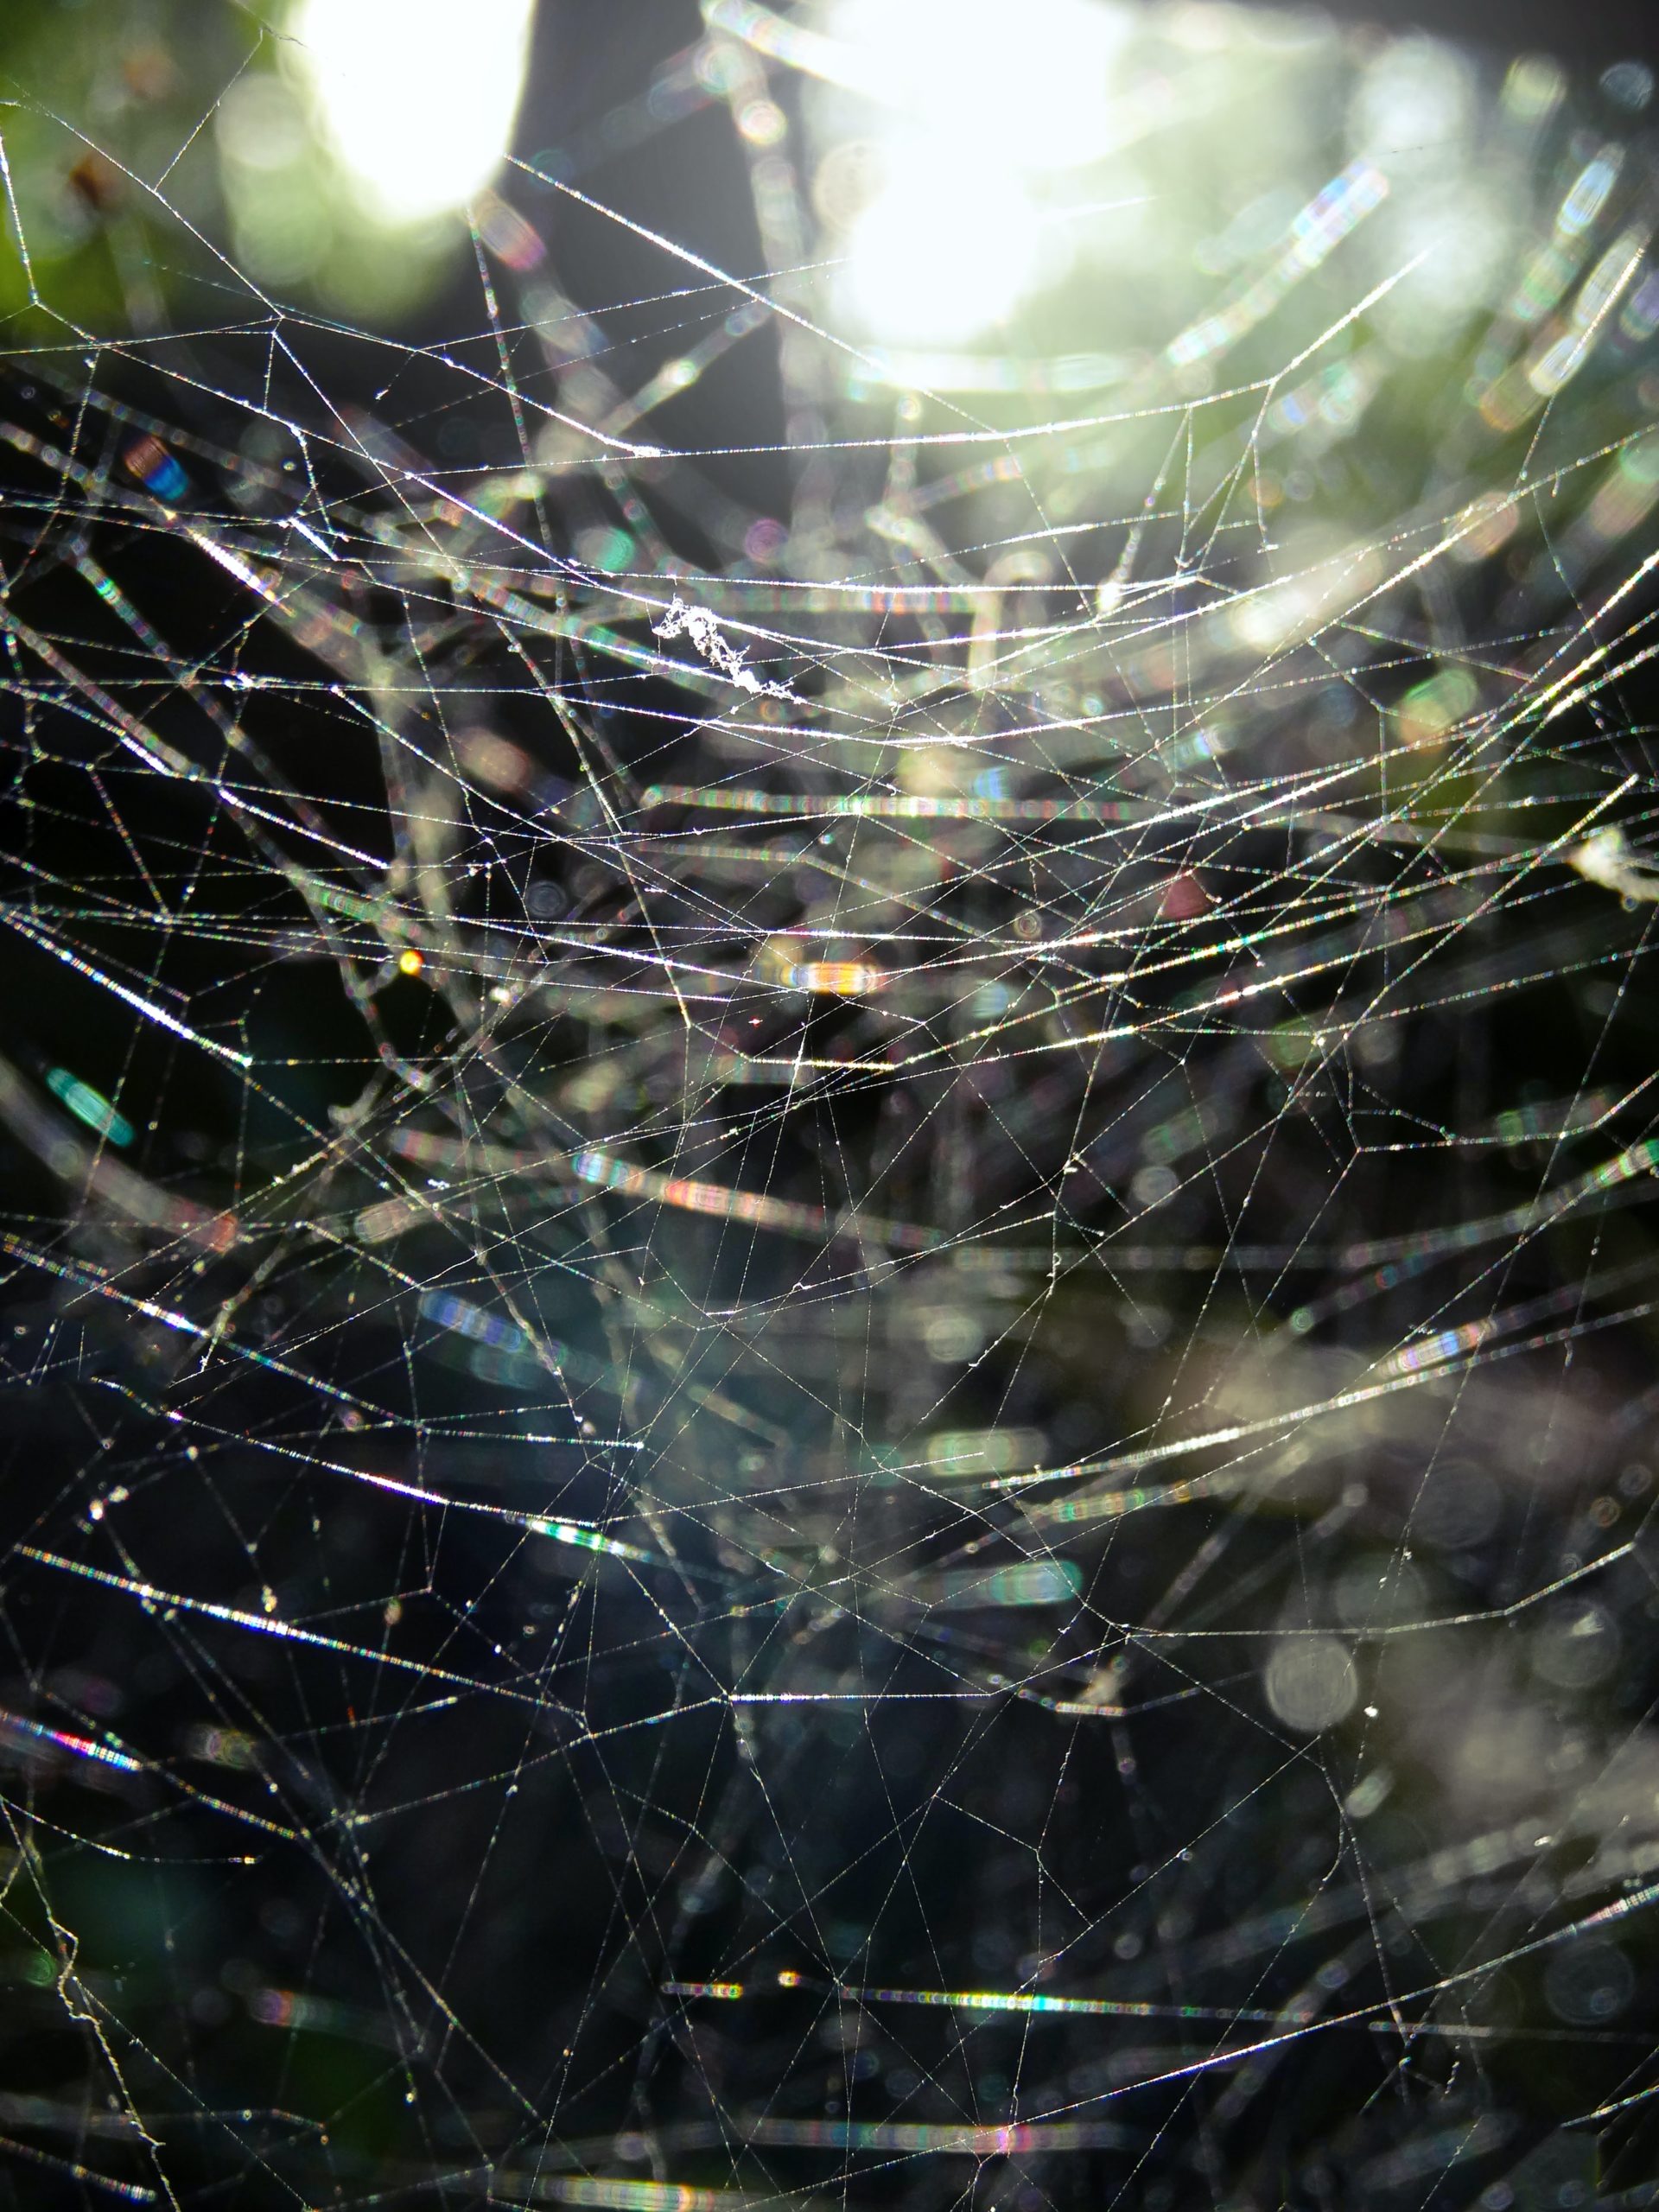 spiders web - links